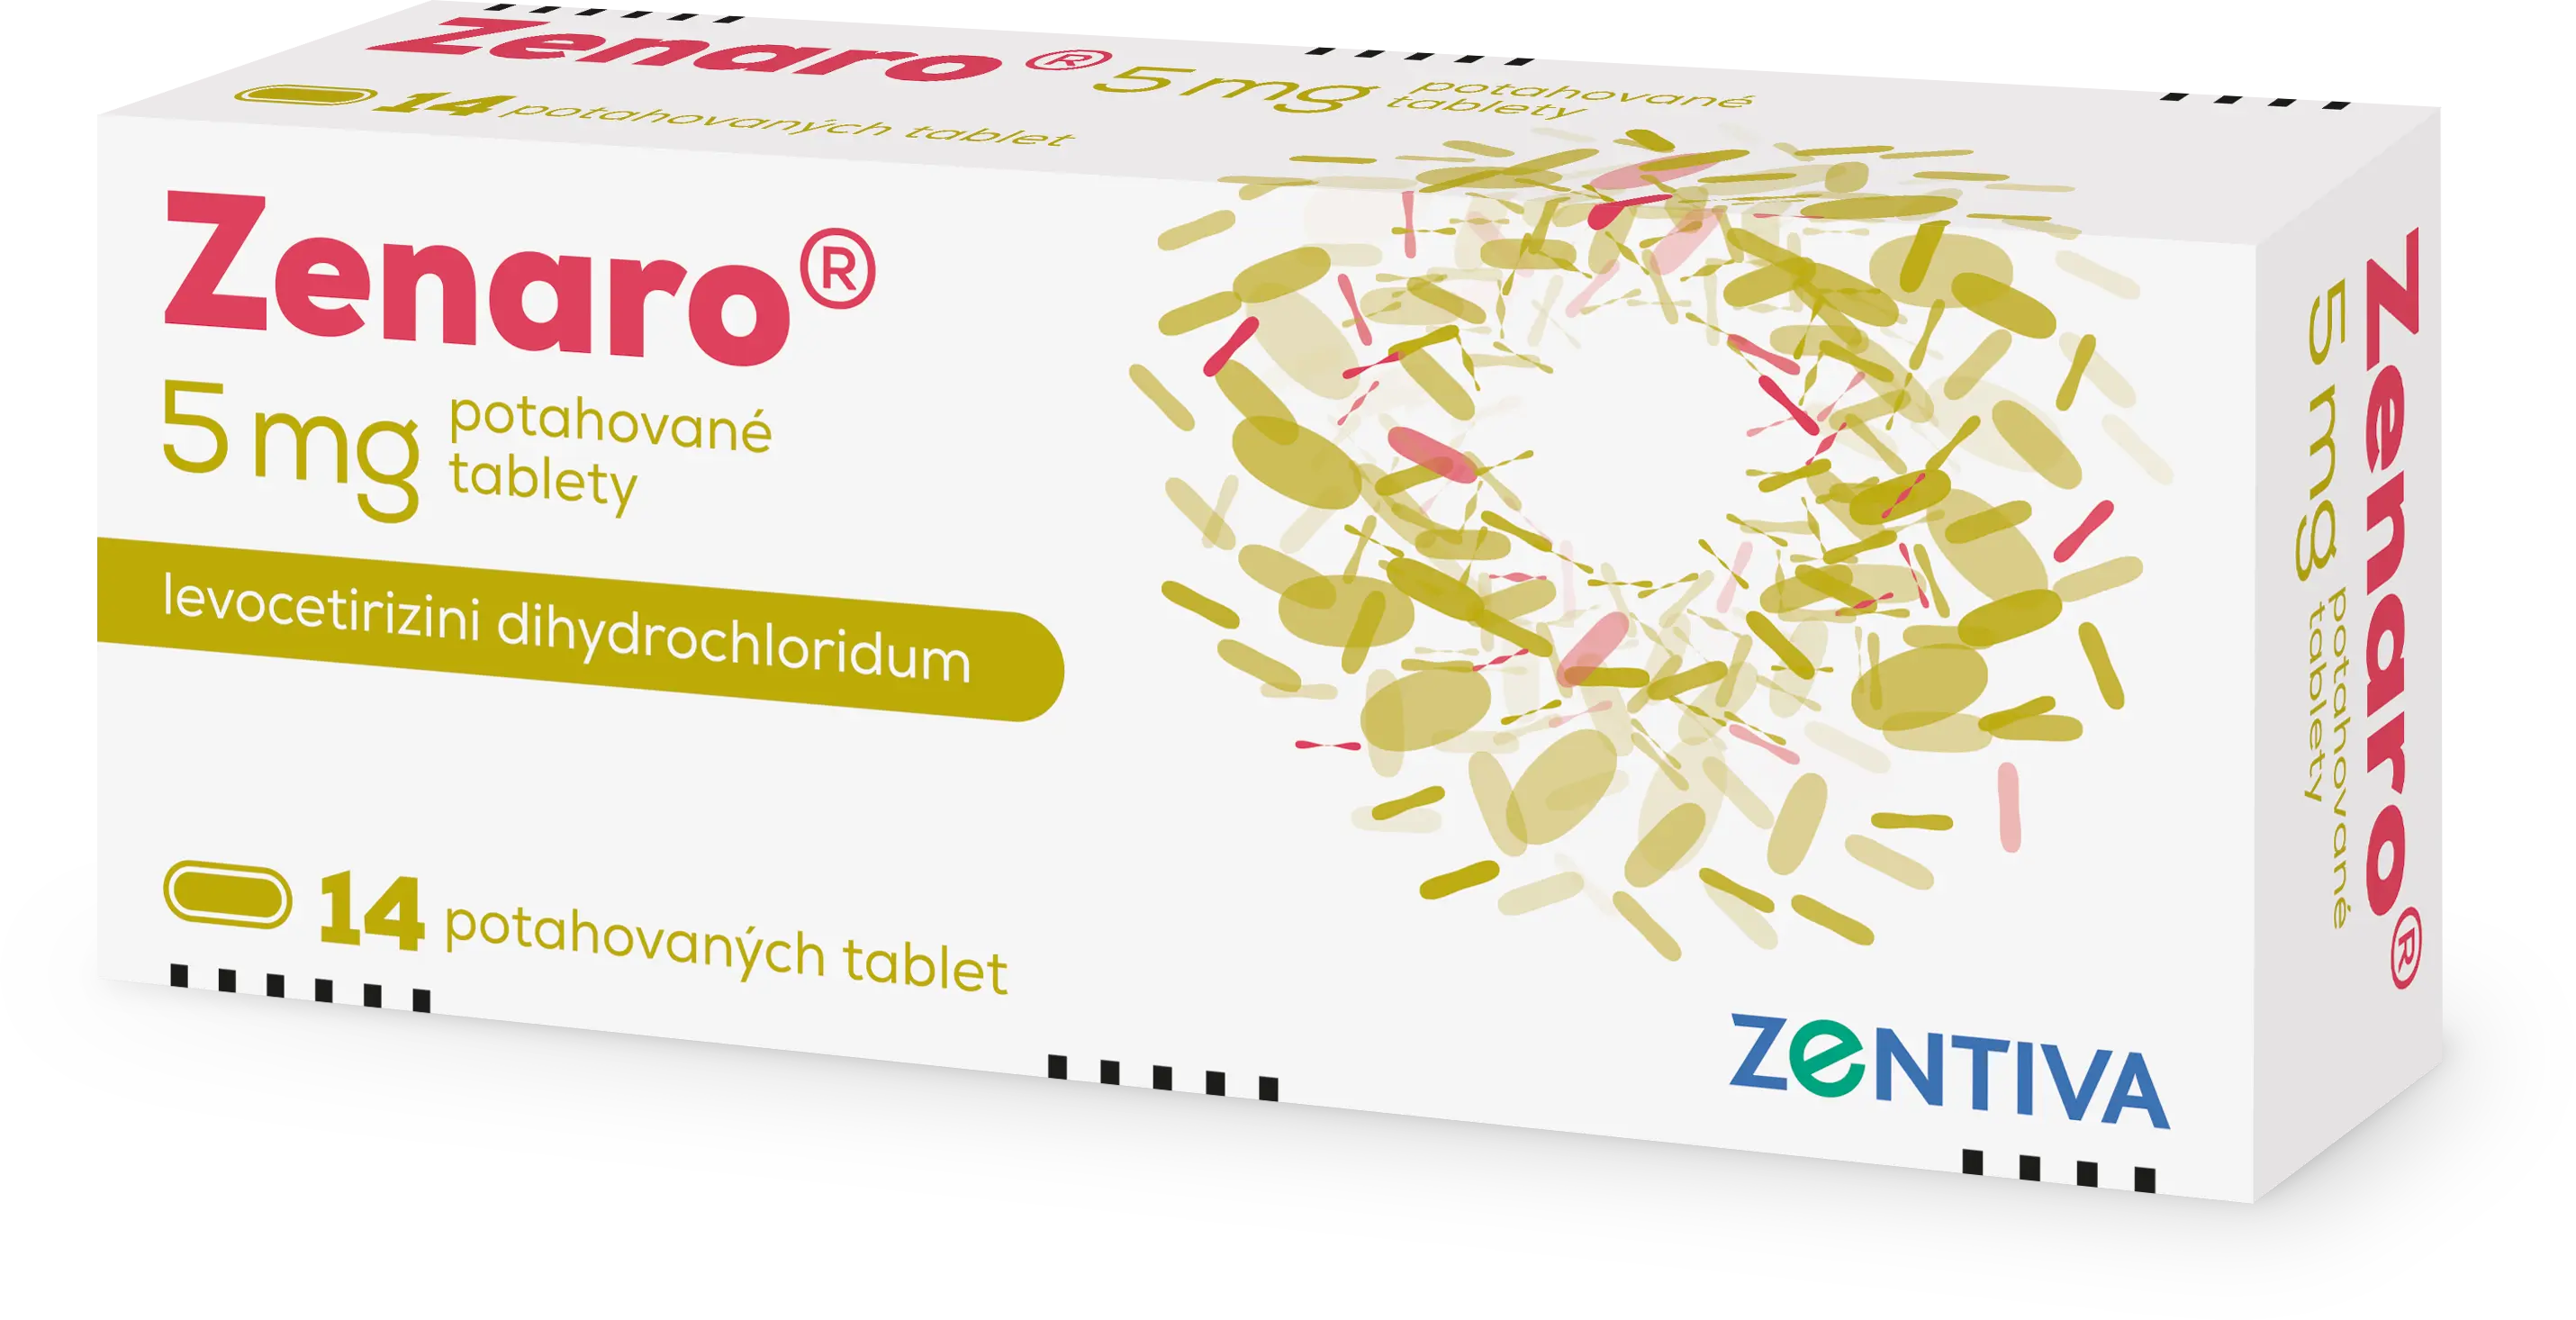 Zenaro 5 mg tbl.flm.14 IV